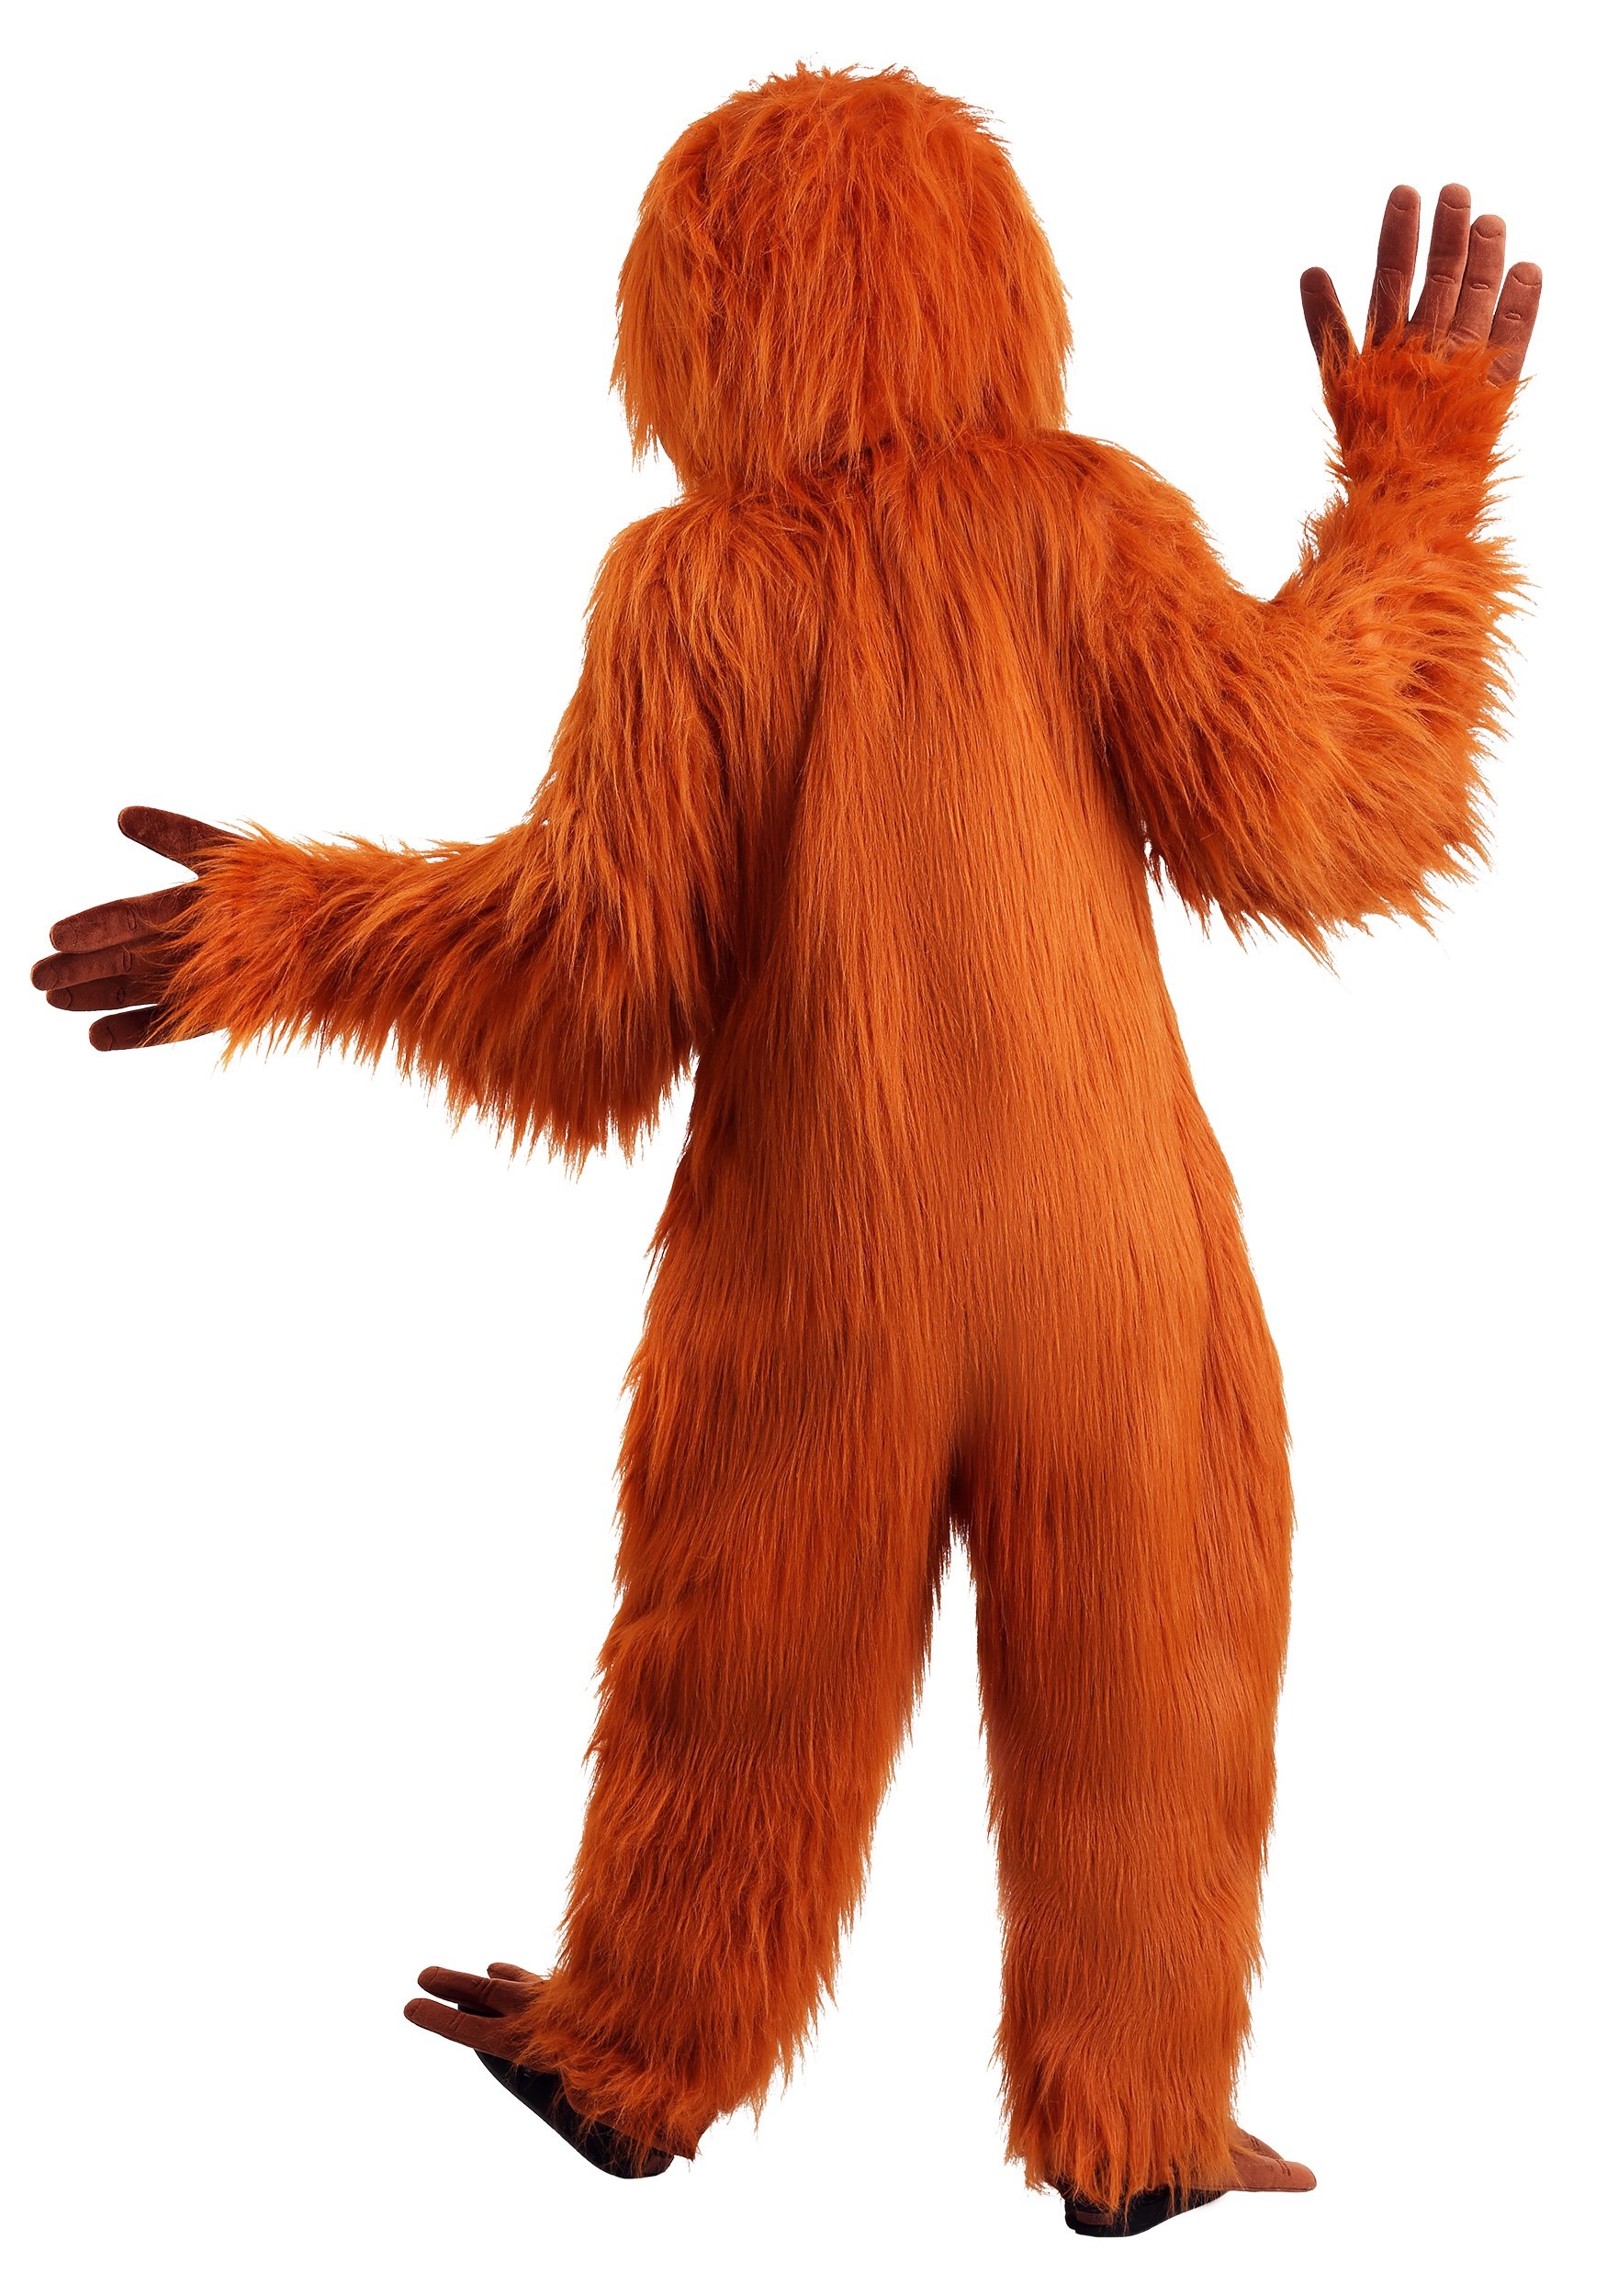 Orangutan Costume For Adults